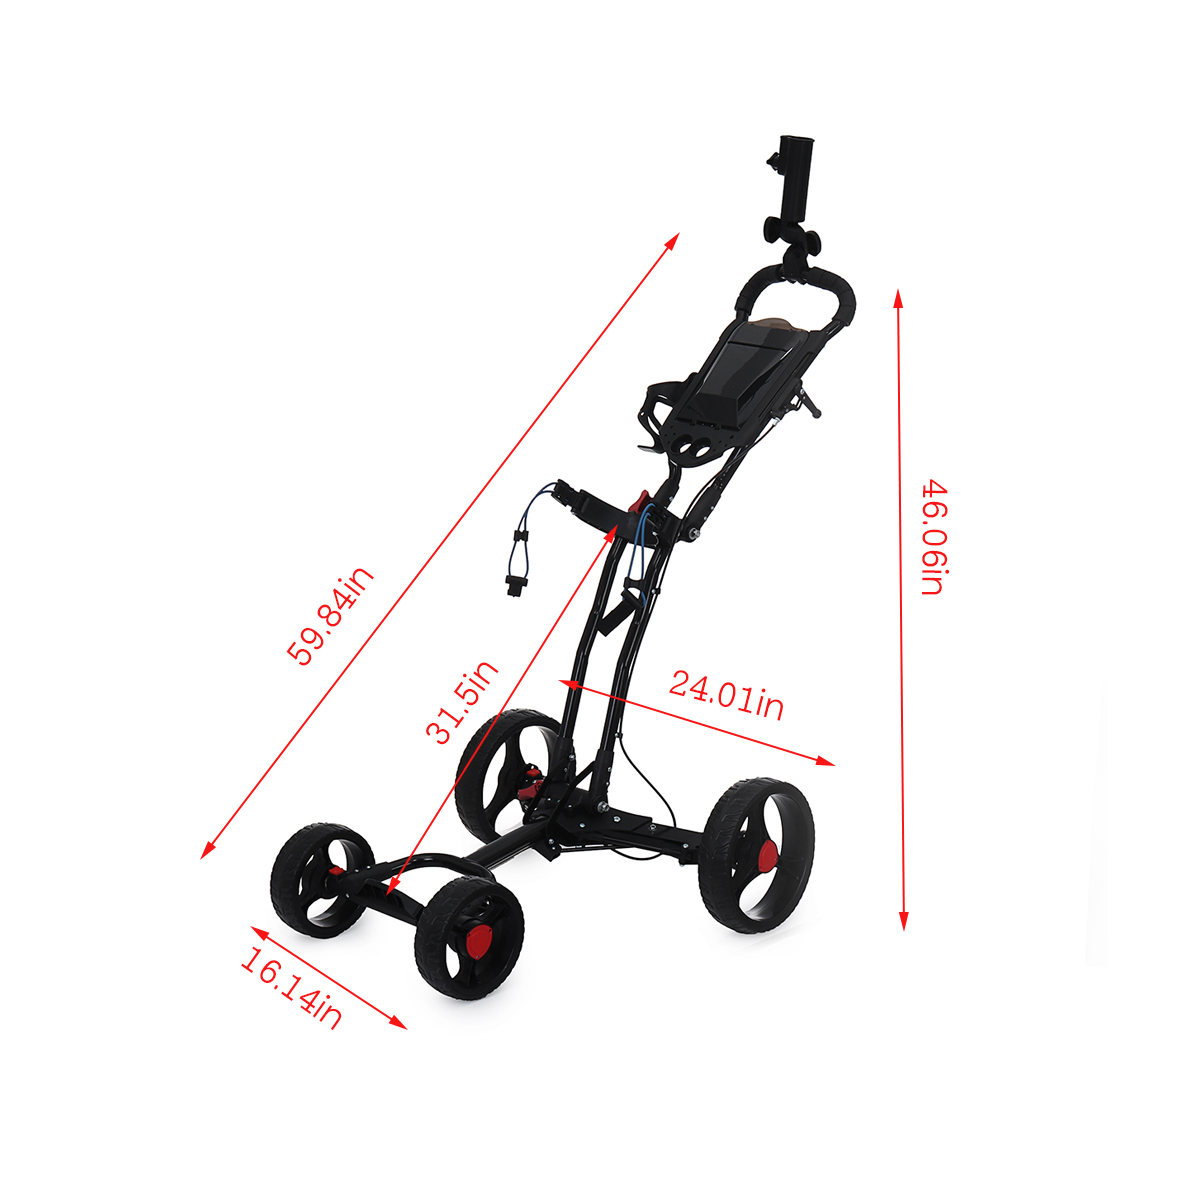 4-Wheel-Folding-Golf-Pull-Push-Cart-Golf-Trolley-Golf-Bag-with-Umbrella-Cup-Holder-Outdoor-Team-Spor-1809198-2